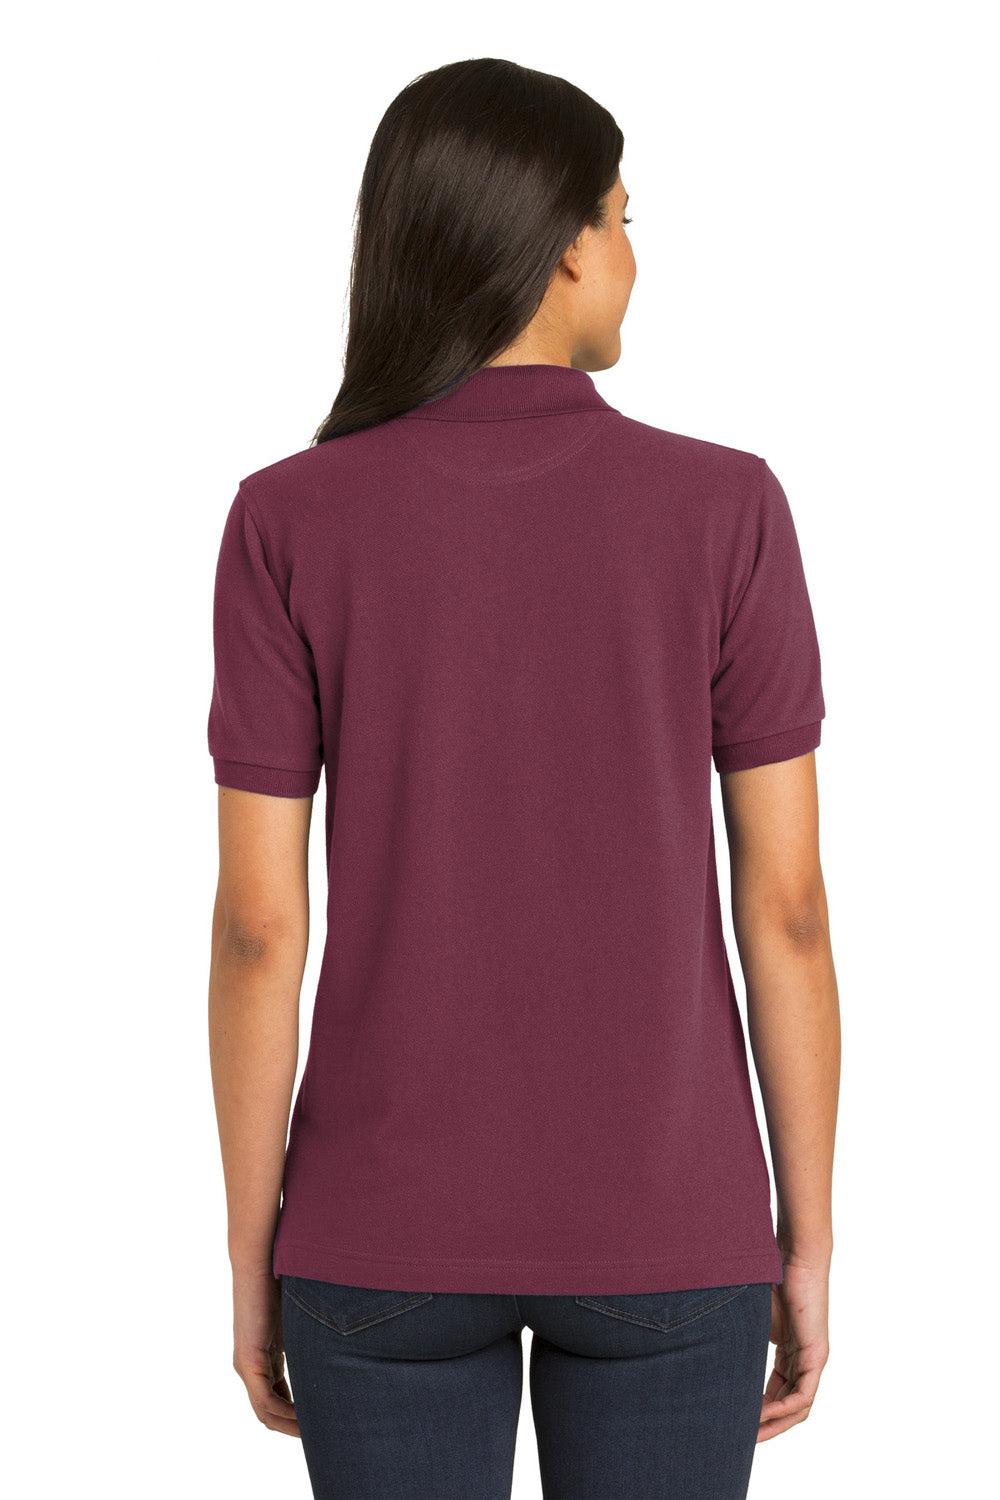 Port Authority L420 Womens Short Sleeve Polo Shirt Burgundy Back